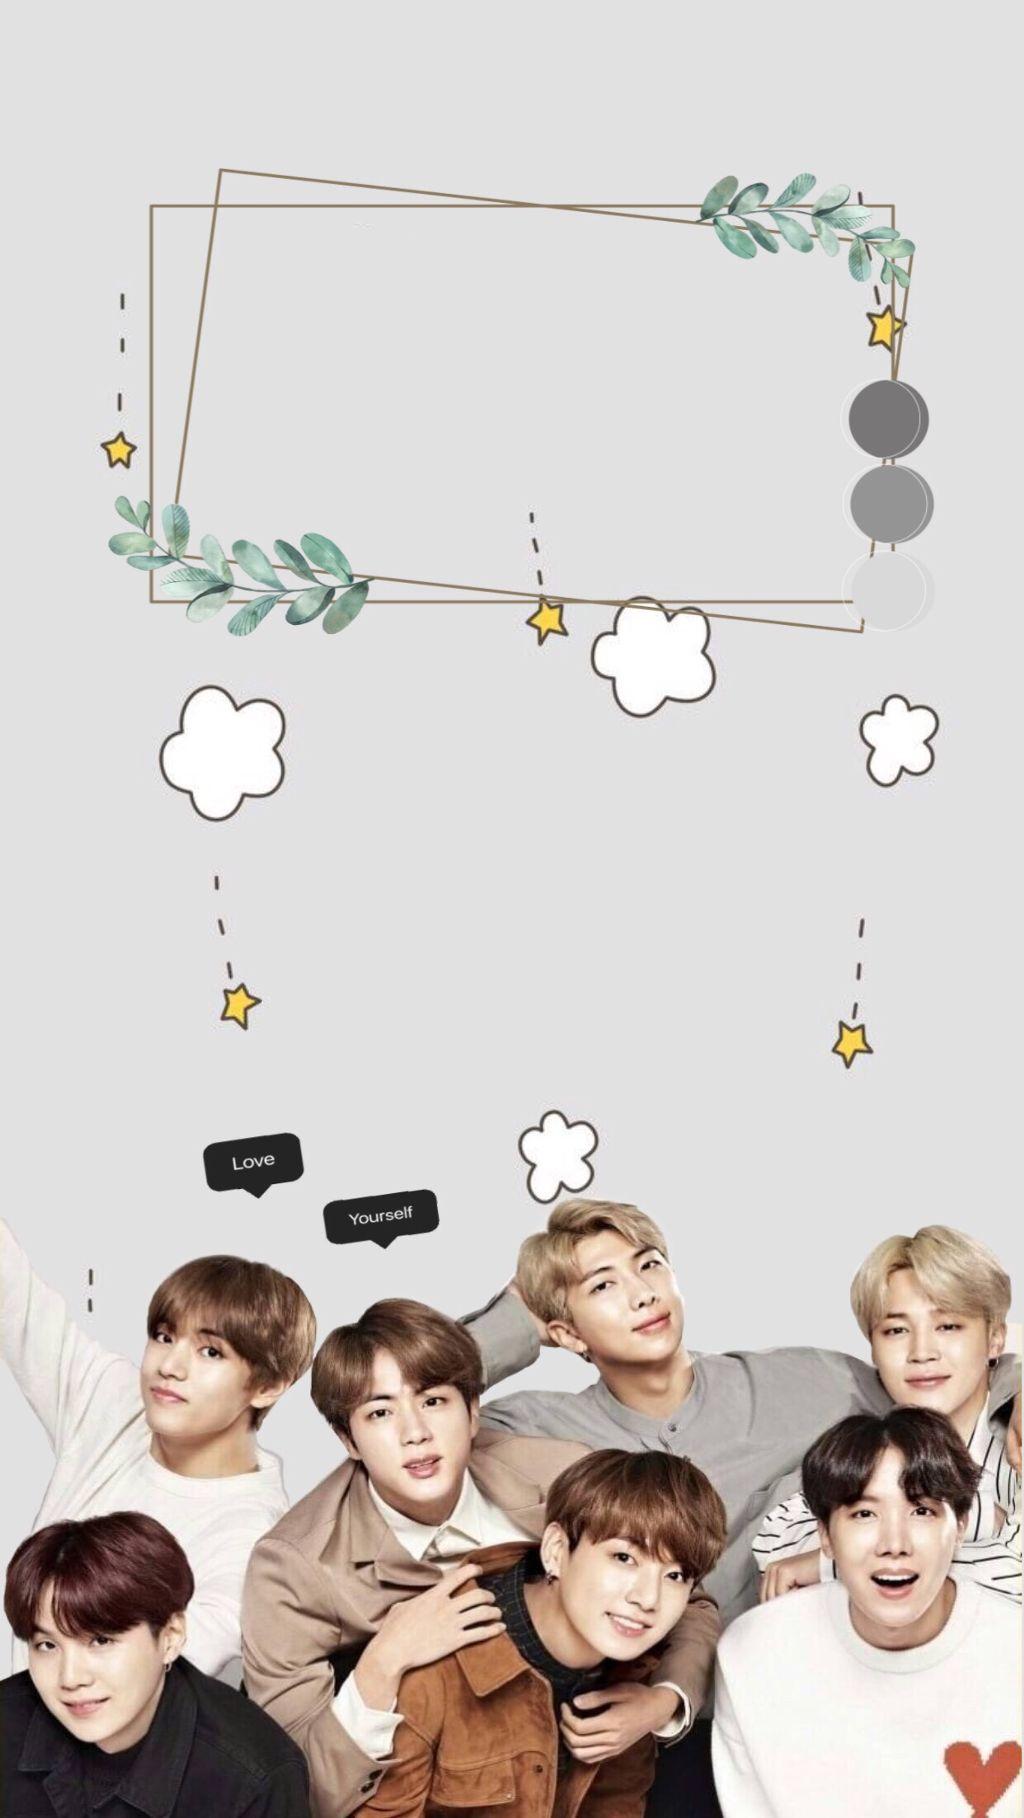 kpop bts BTS lockscreen cute oppa wallpaper edits perf